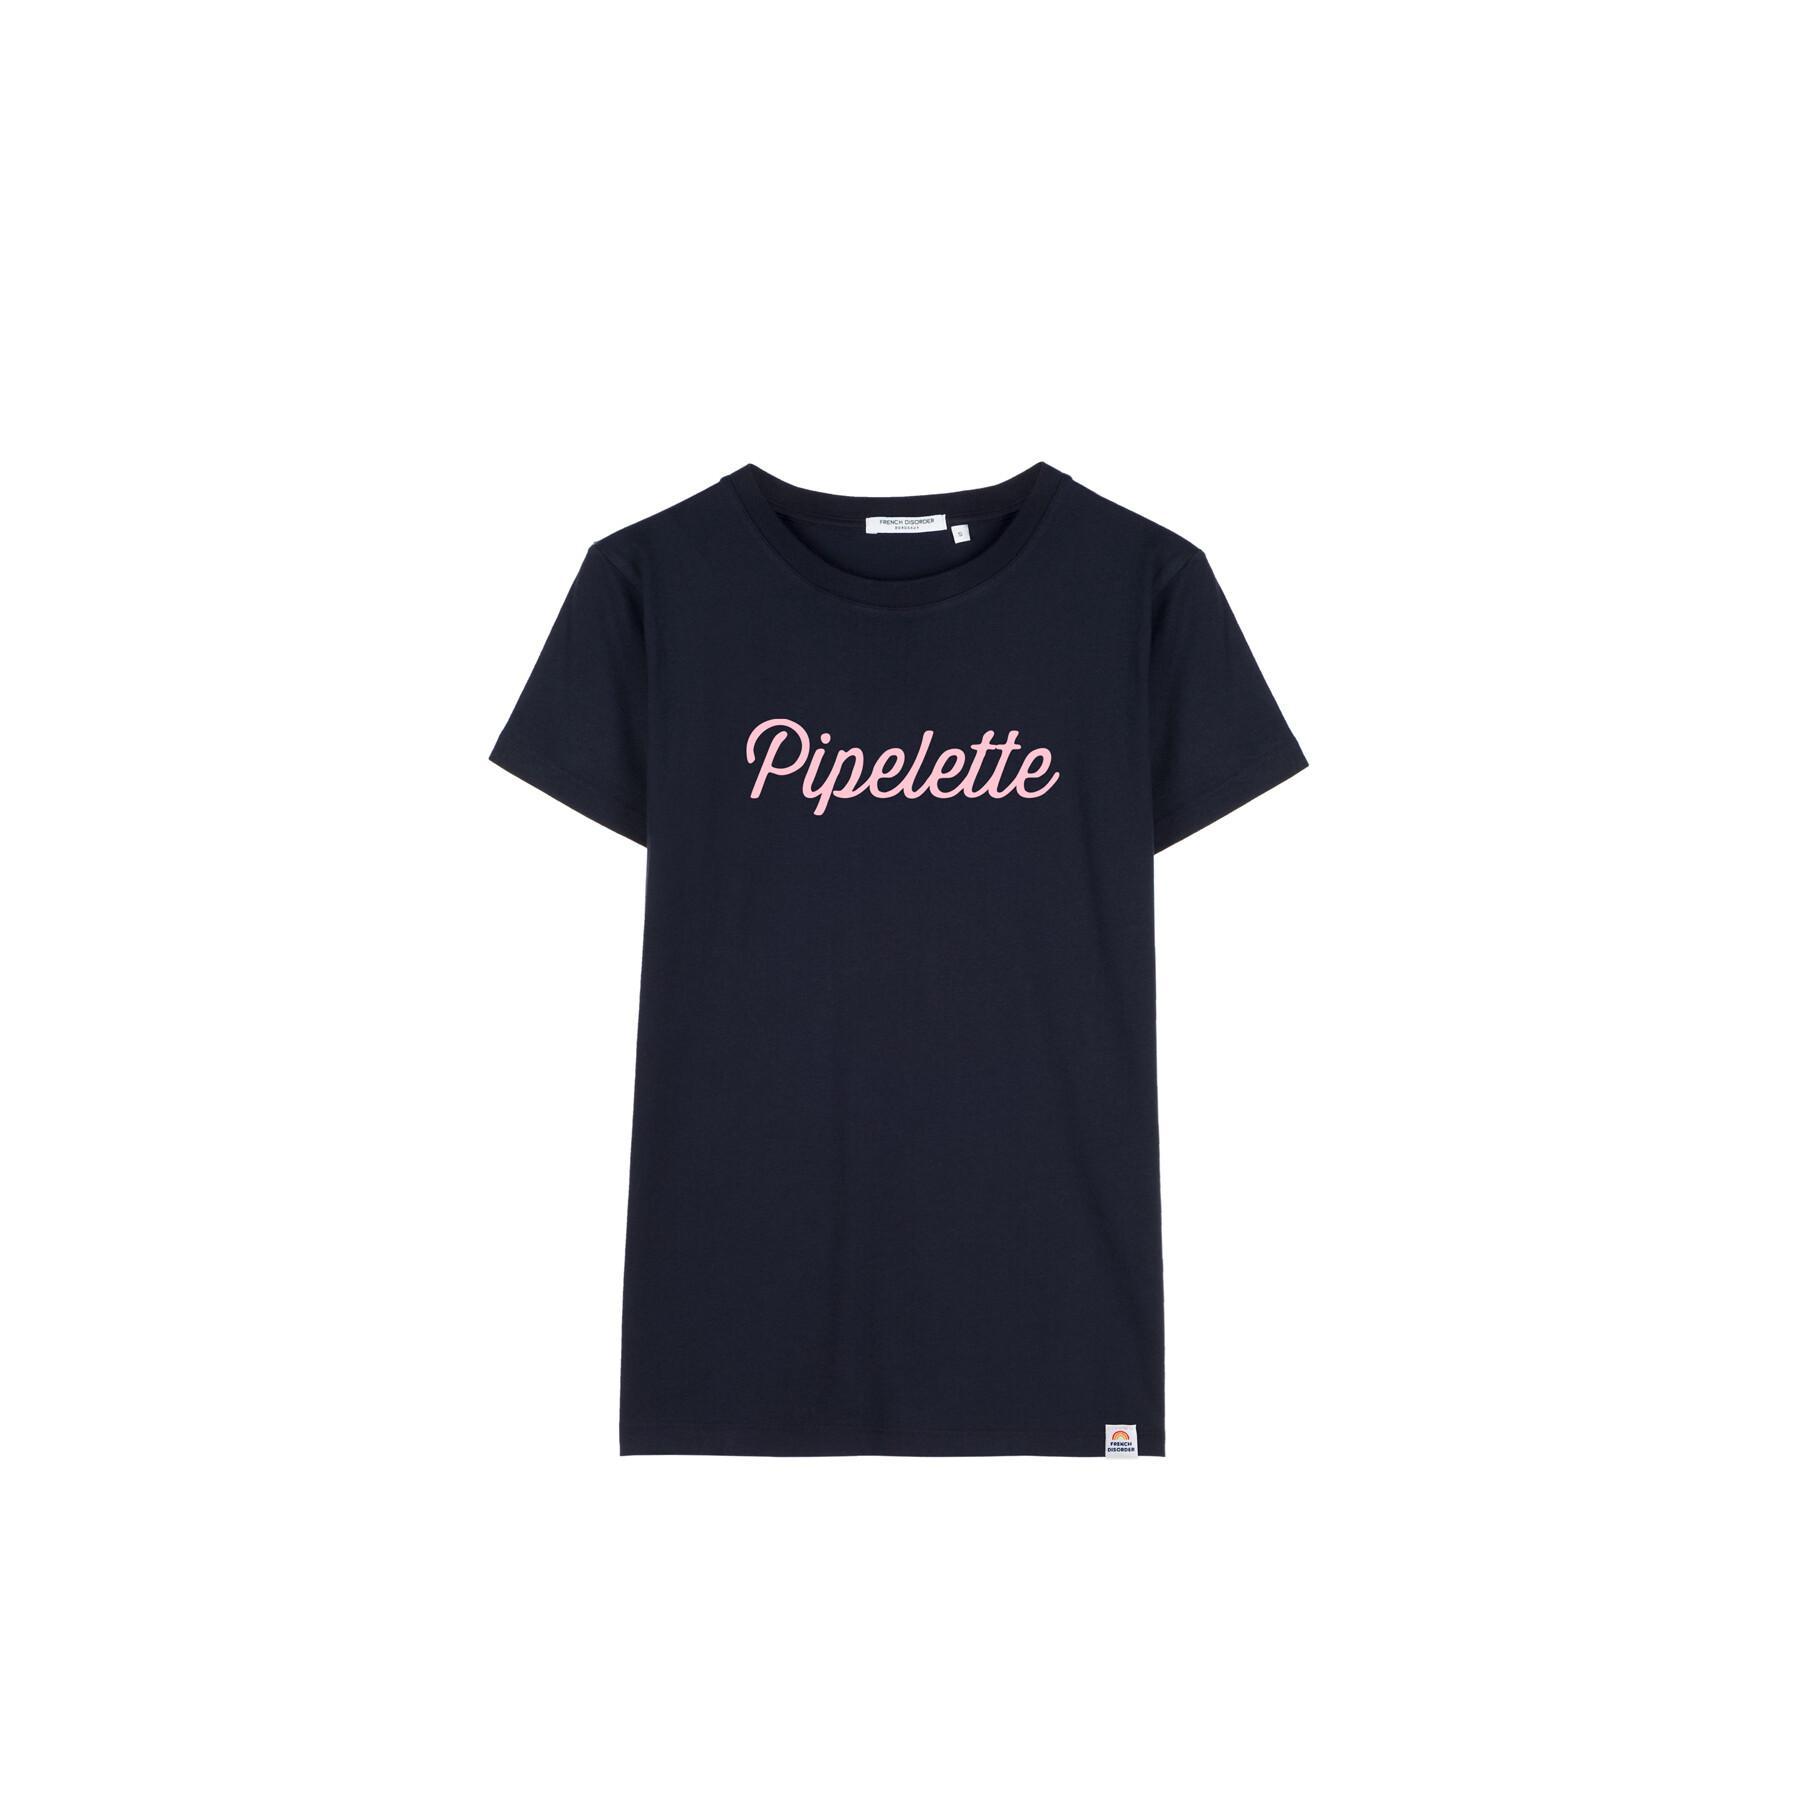 T-shirt de rapariga French Disorder Pipelette